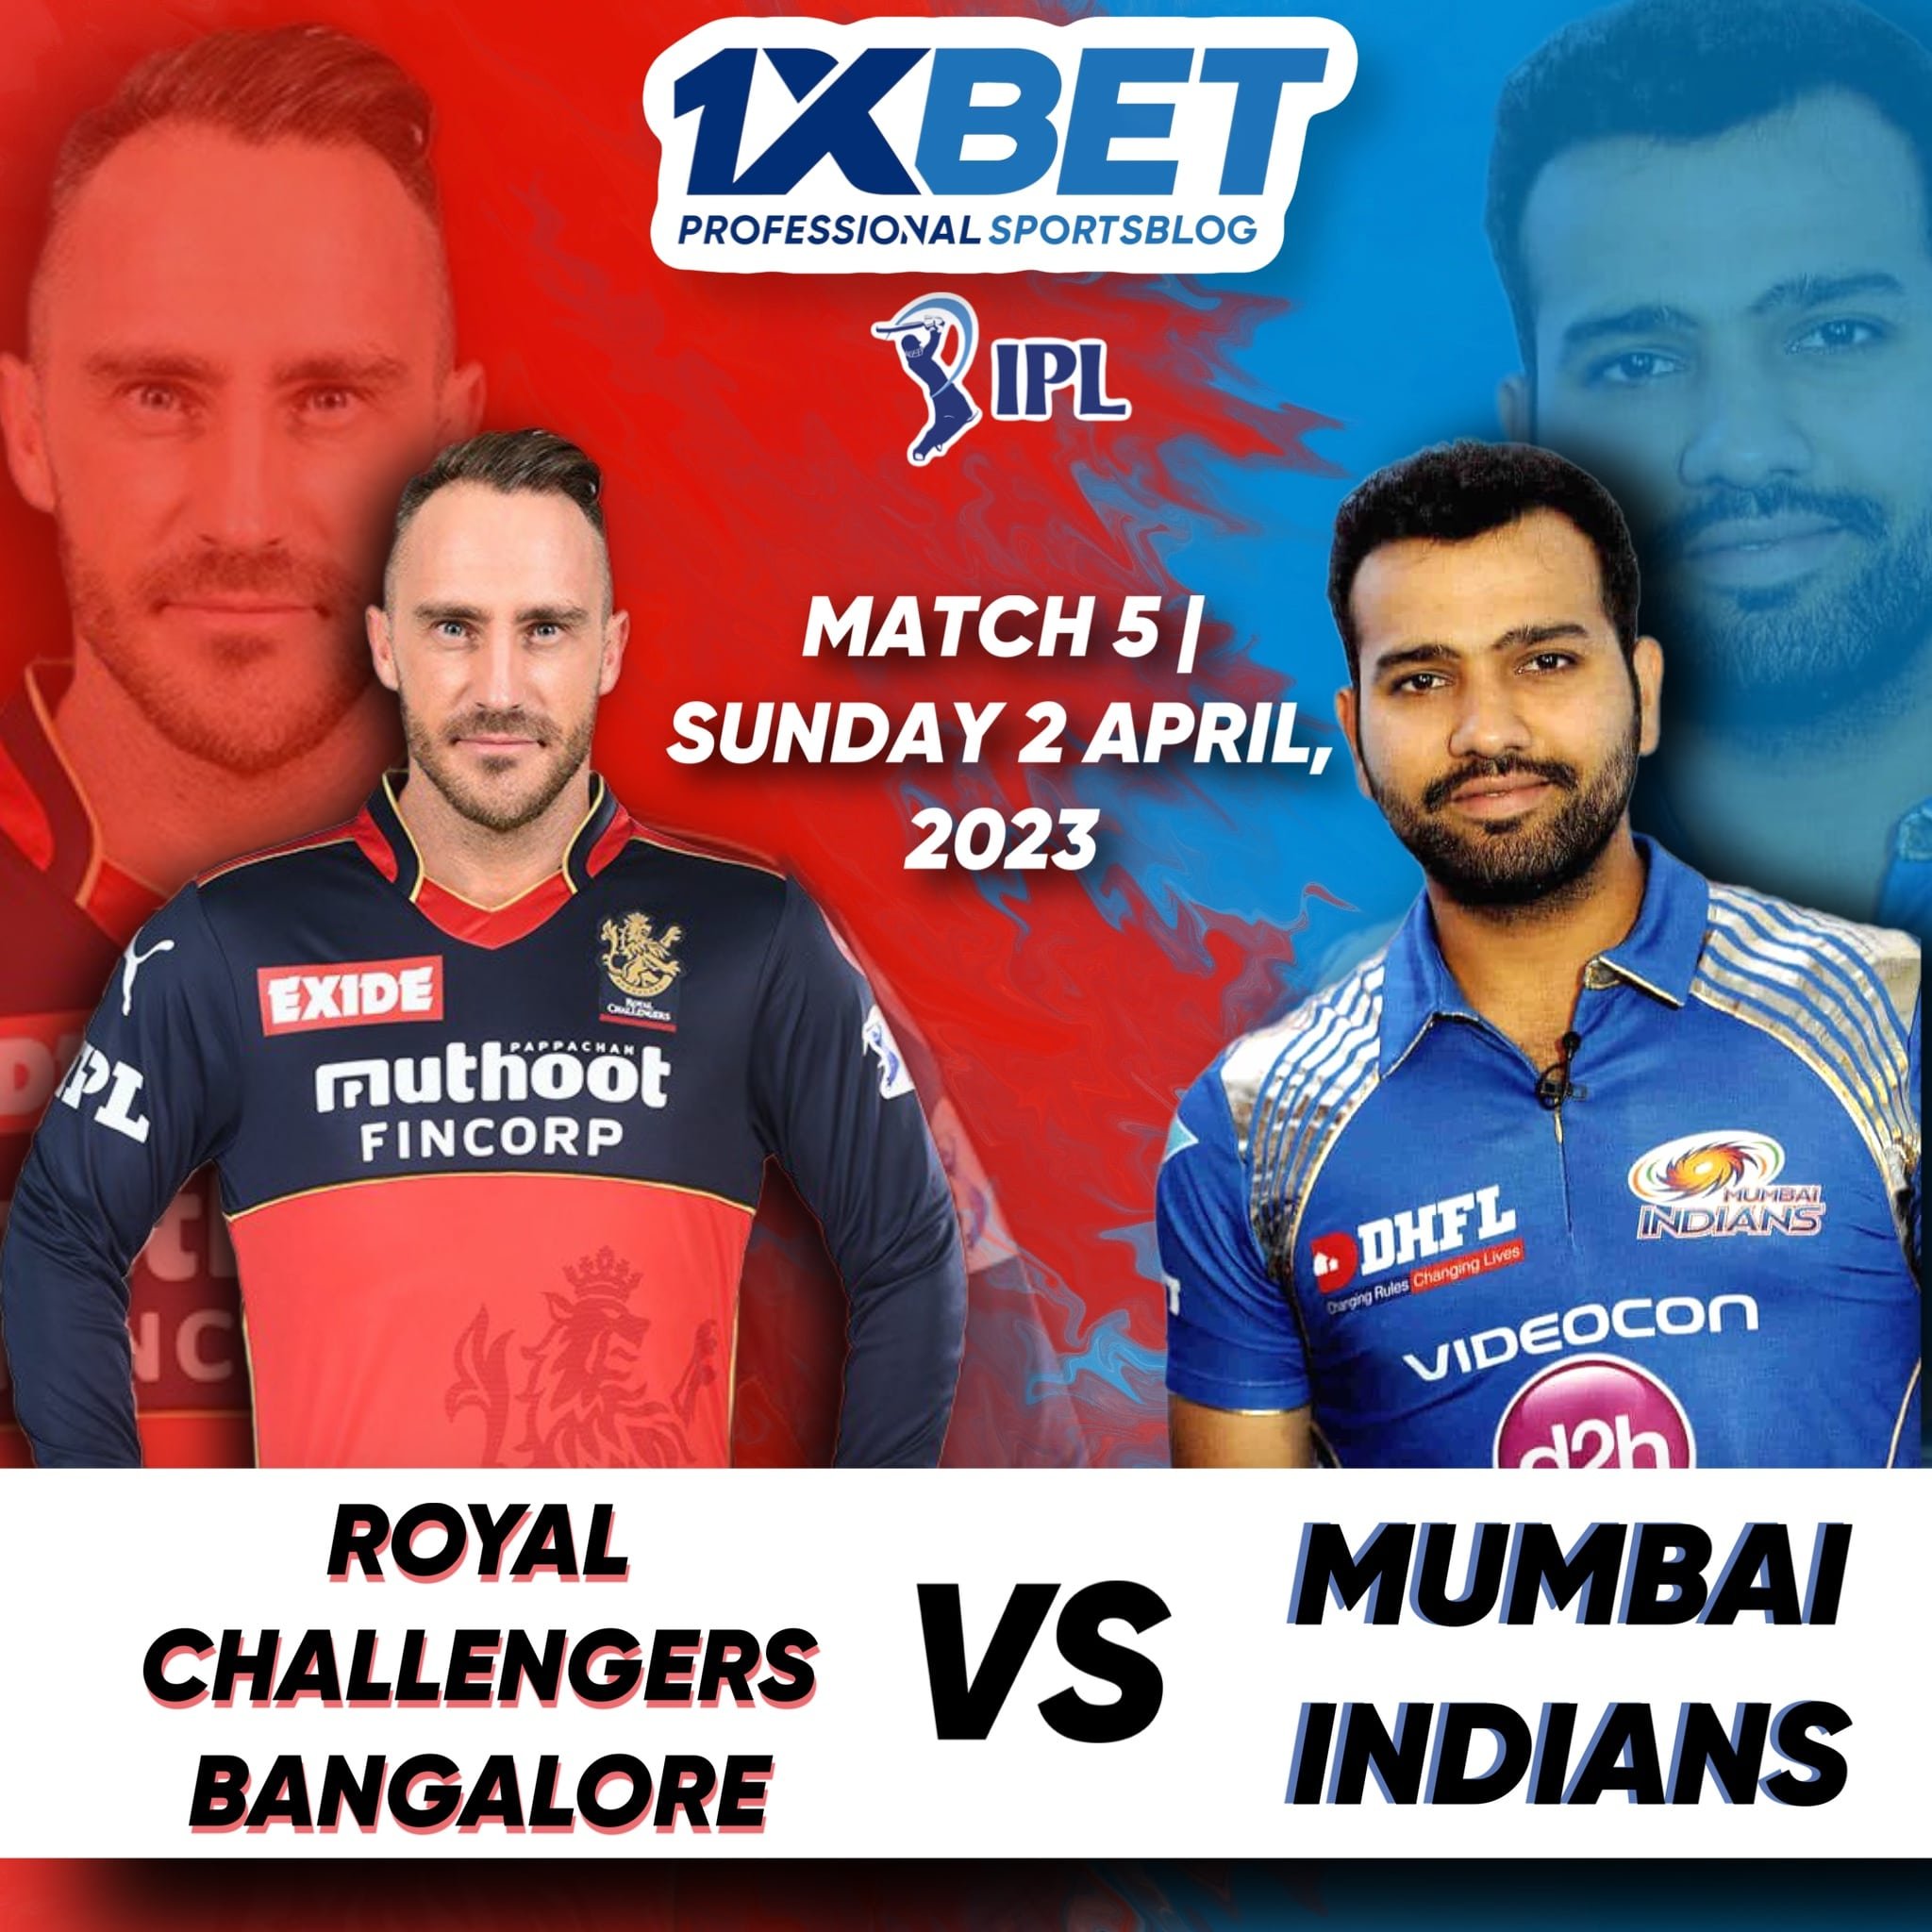 Royal Challengers Bangalore vs Mumbai Indians, IPL 2023, 5th Match Analysis